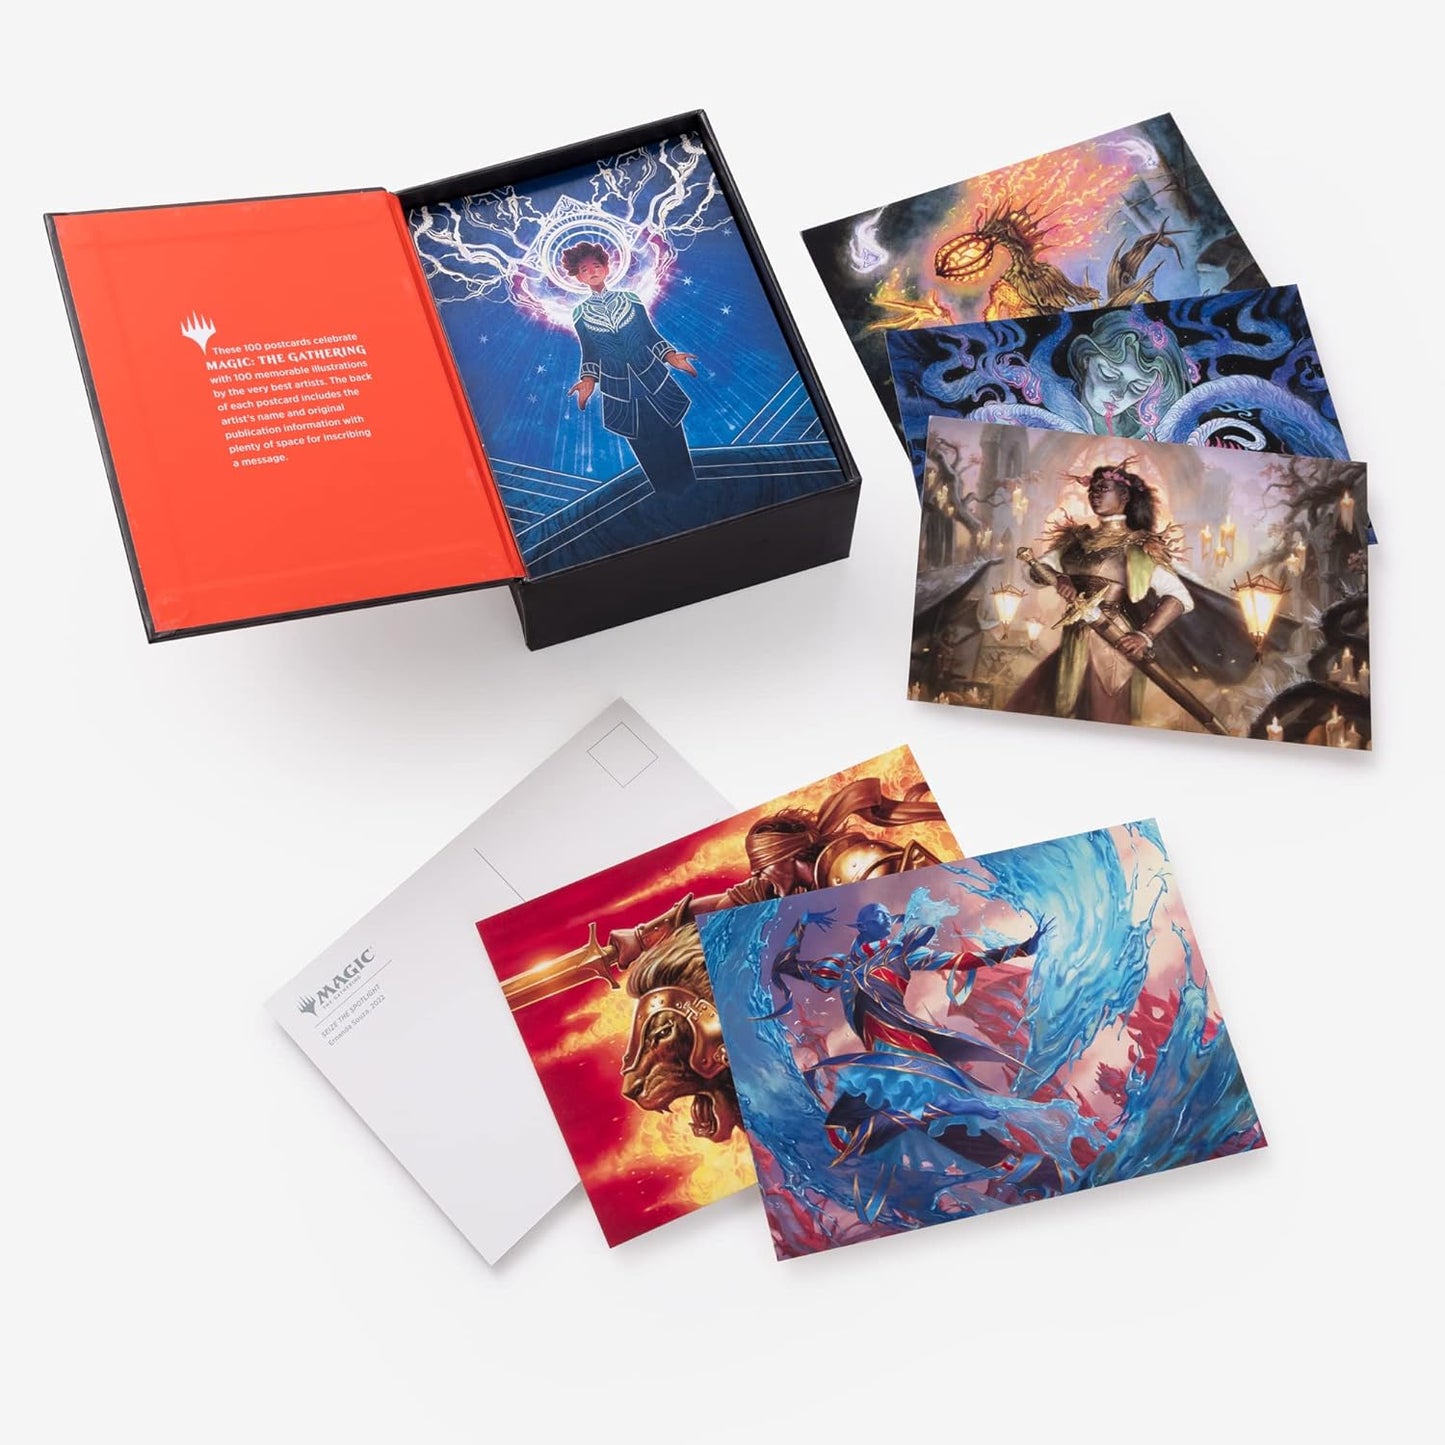 Magic the Gathering - Post Card Set: Masterworks of Magic Art